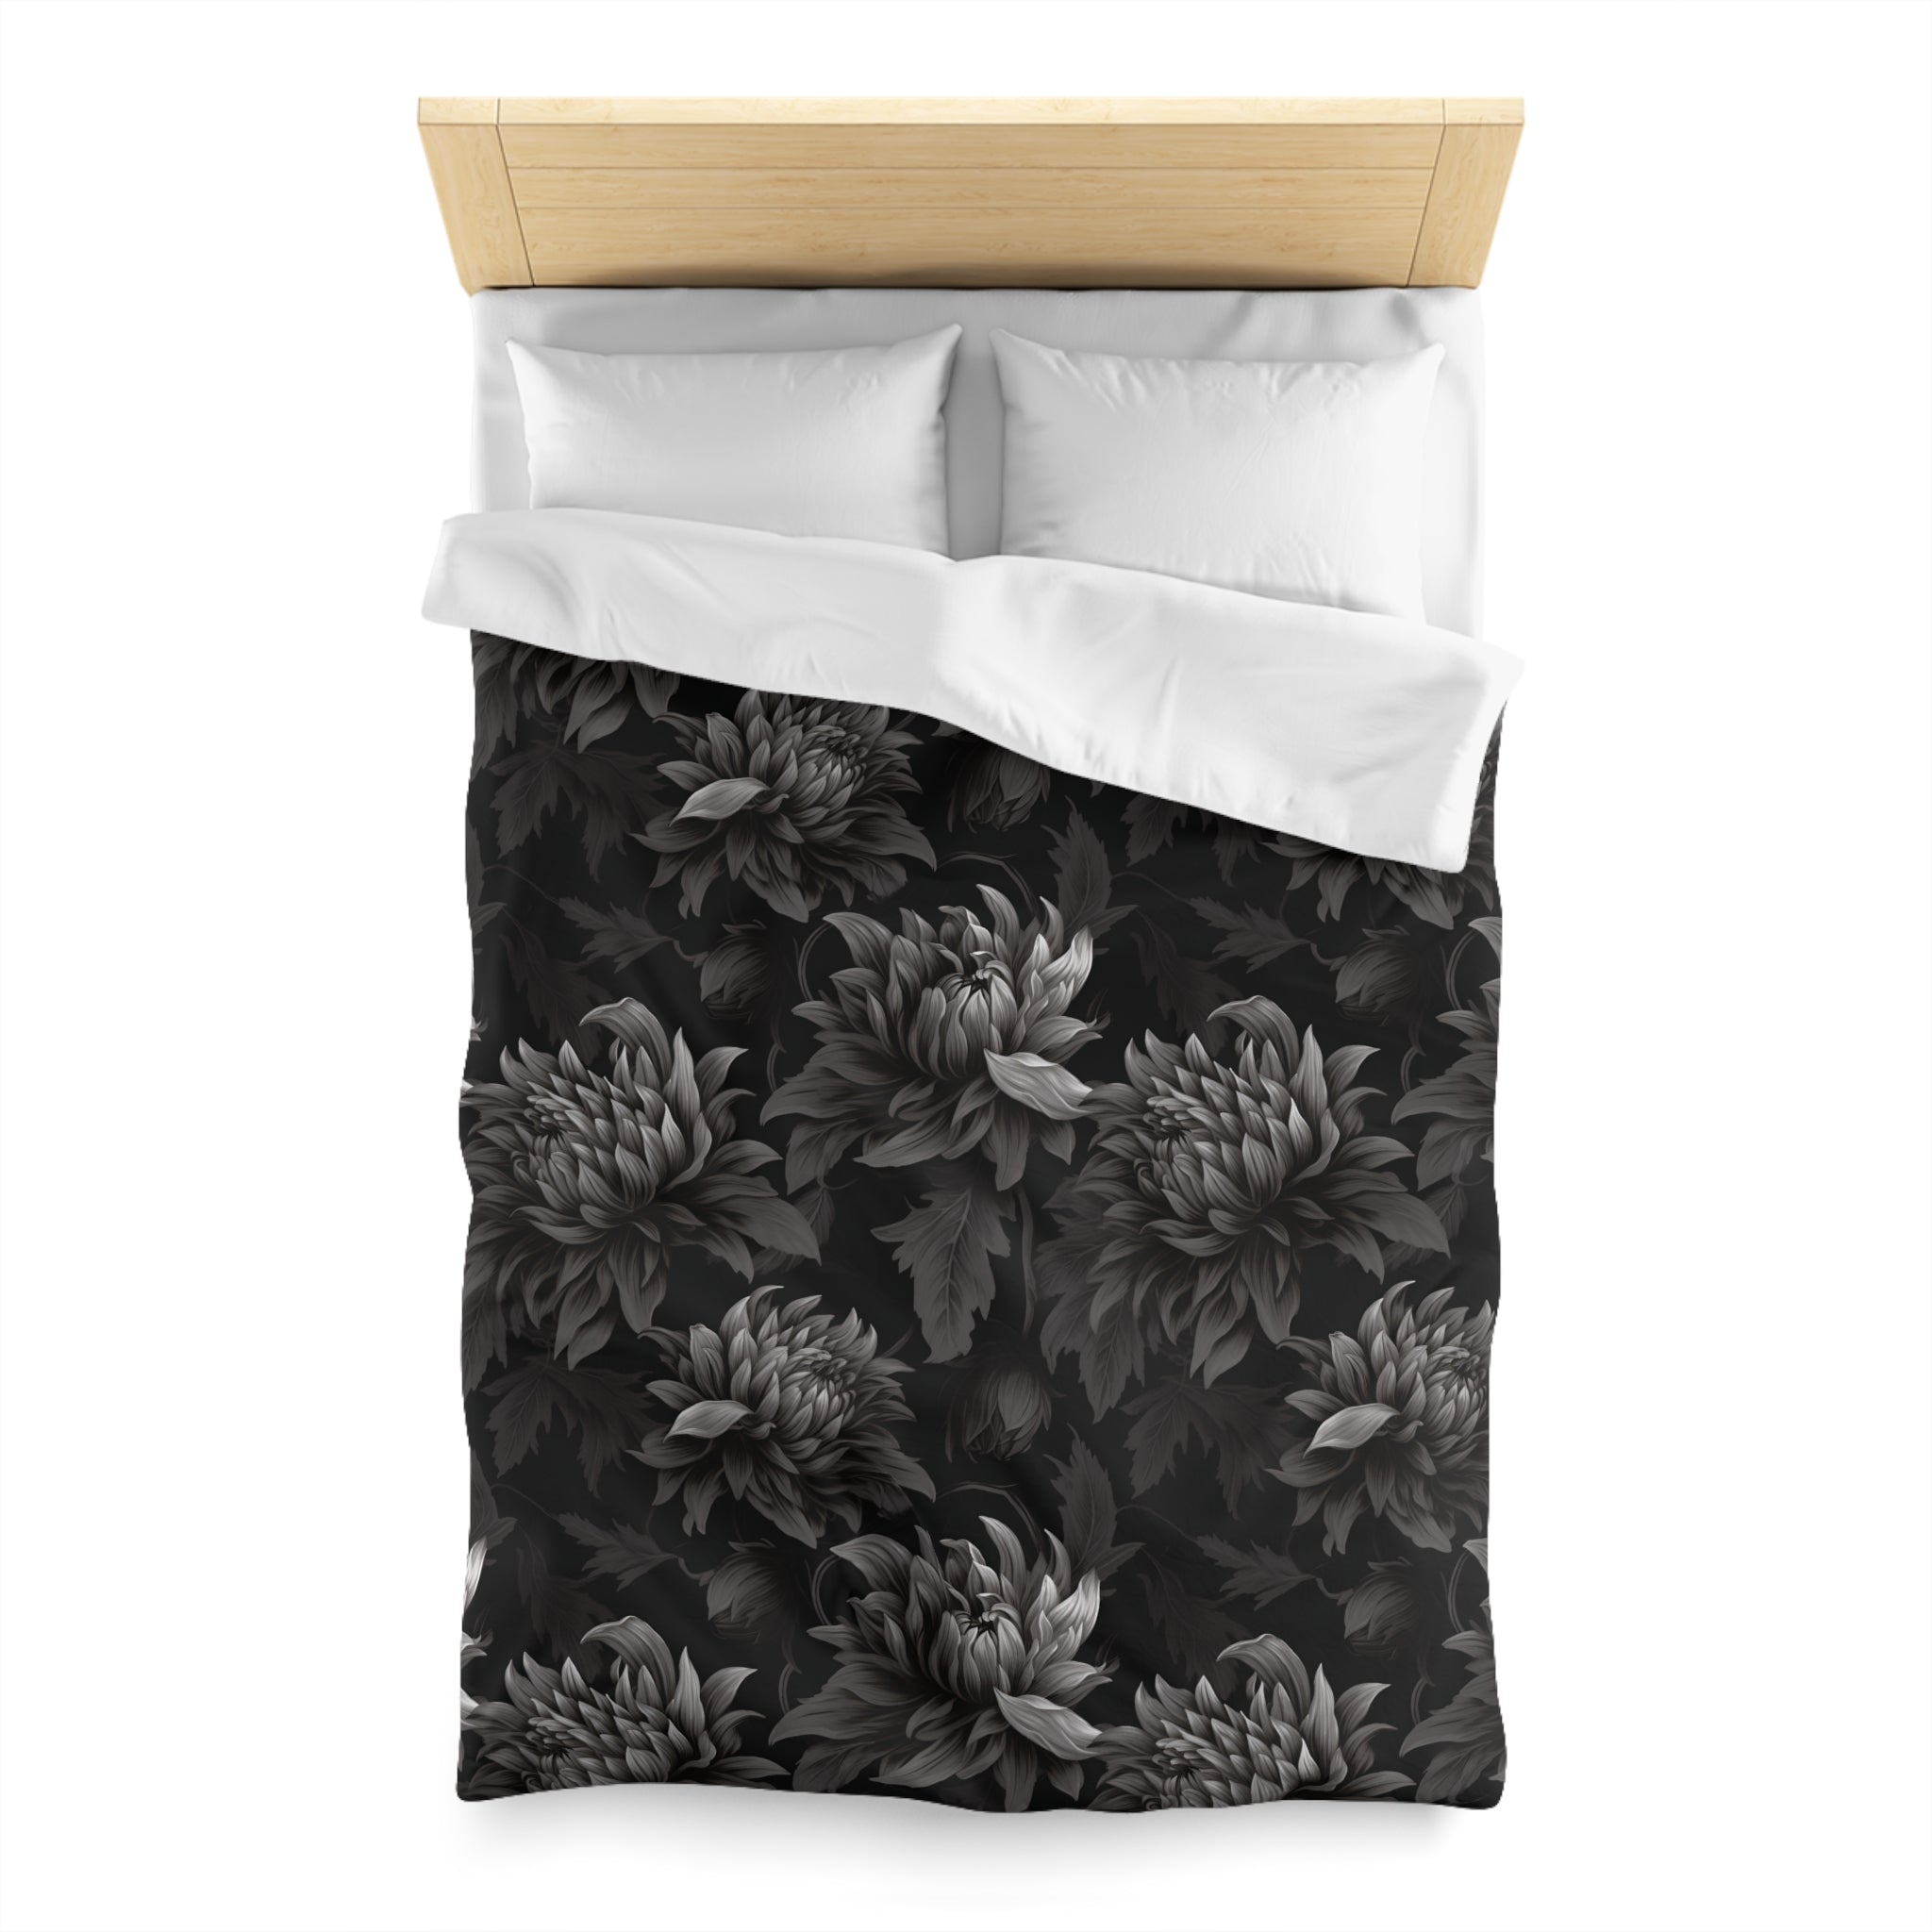 Midnight Black Dahlia Floral Duvet Cover with Pillow Shams, Microfiber